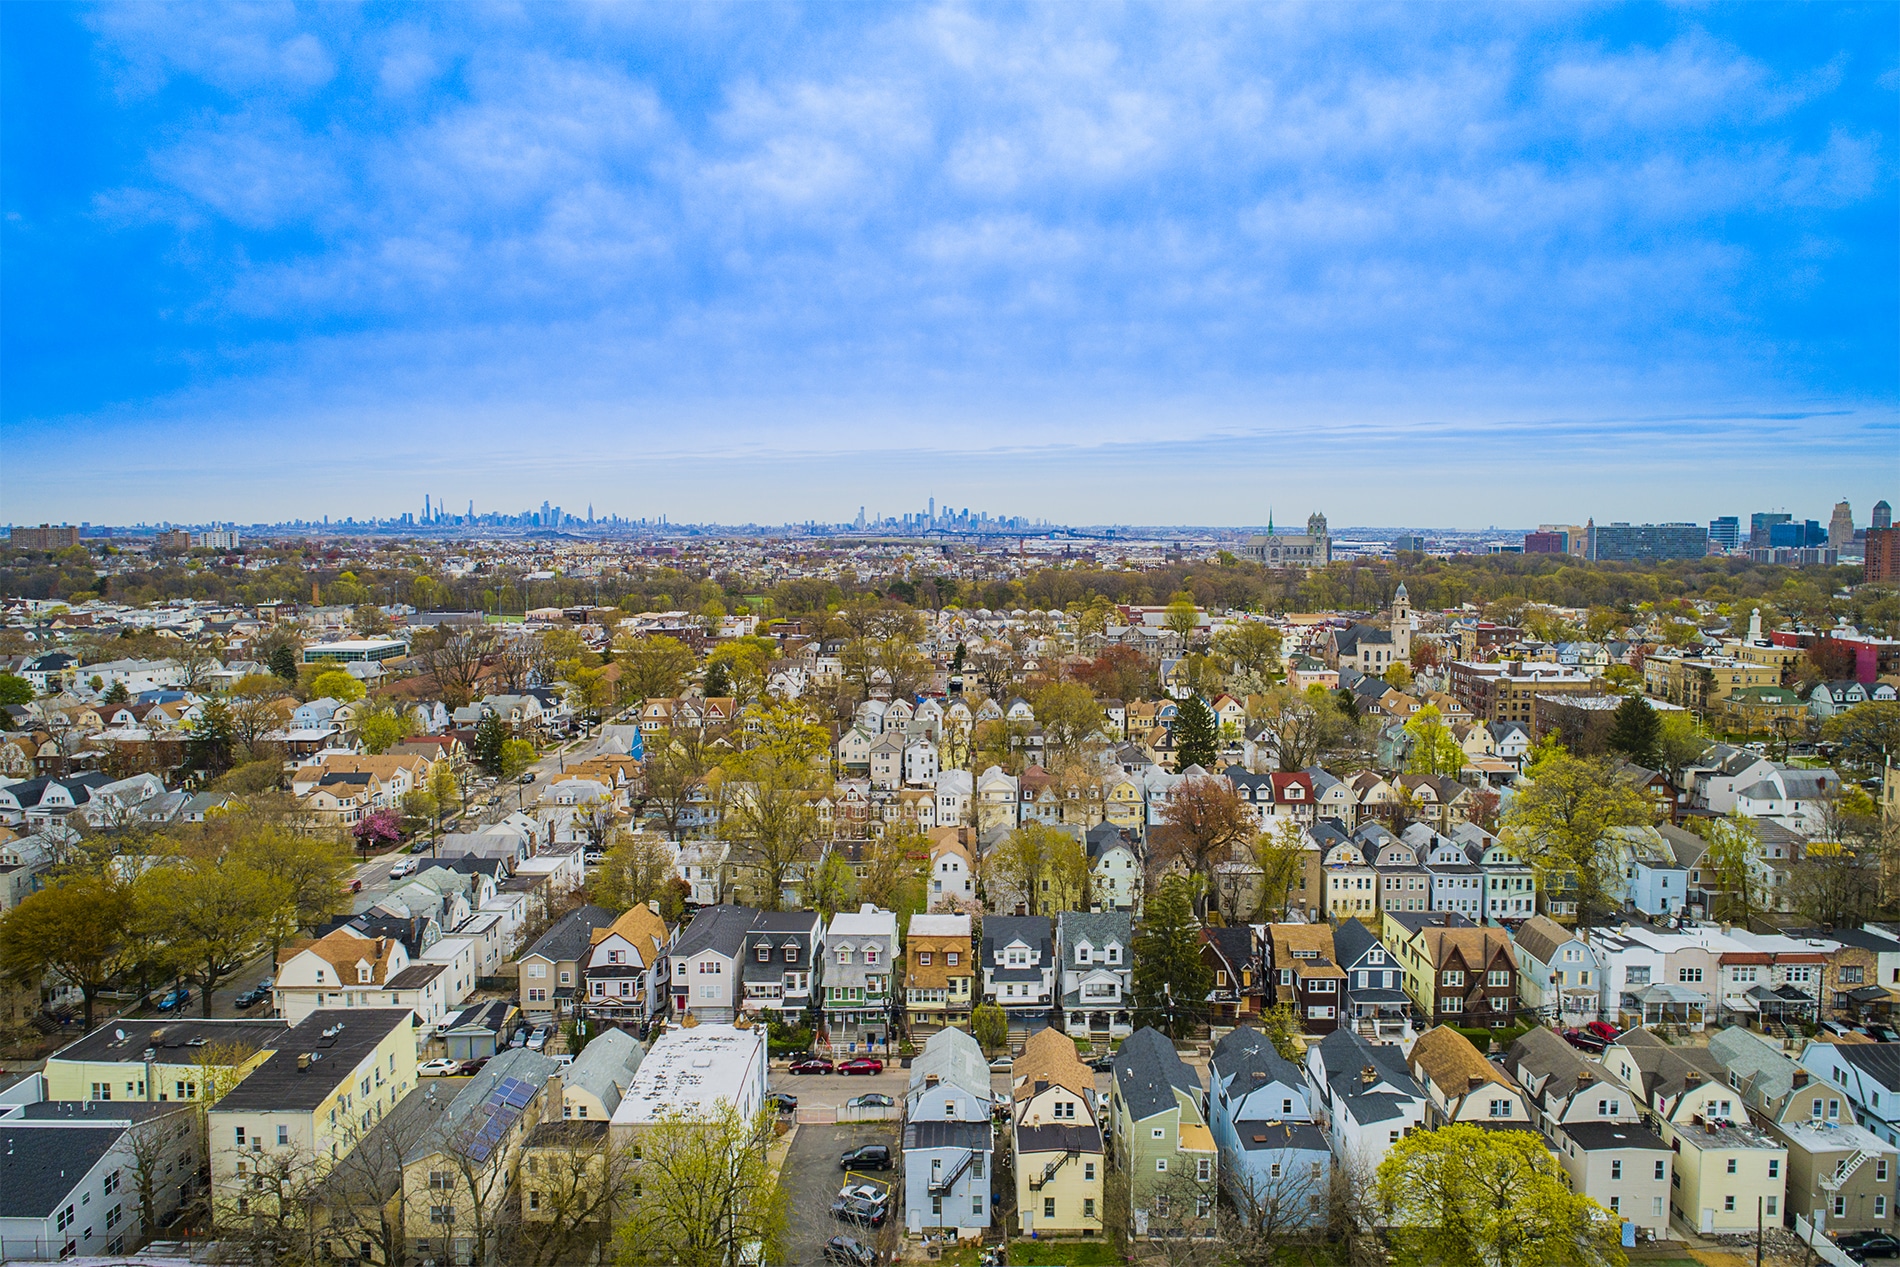 Drone Photograph taken of a neighborhood in North Newark in Newark New Jersey